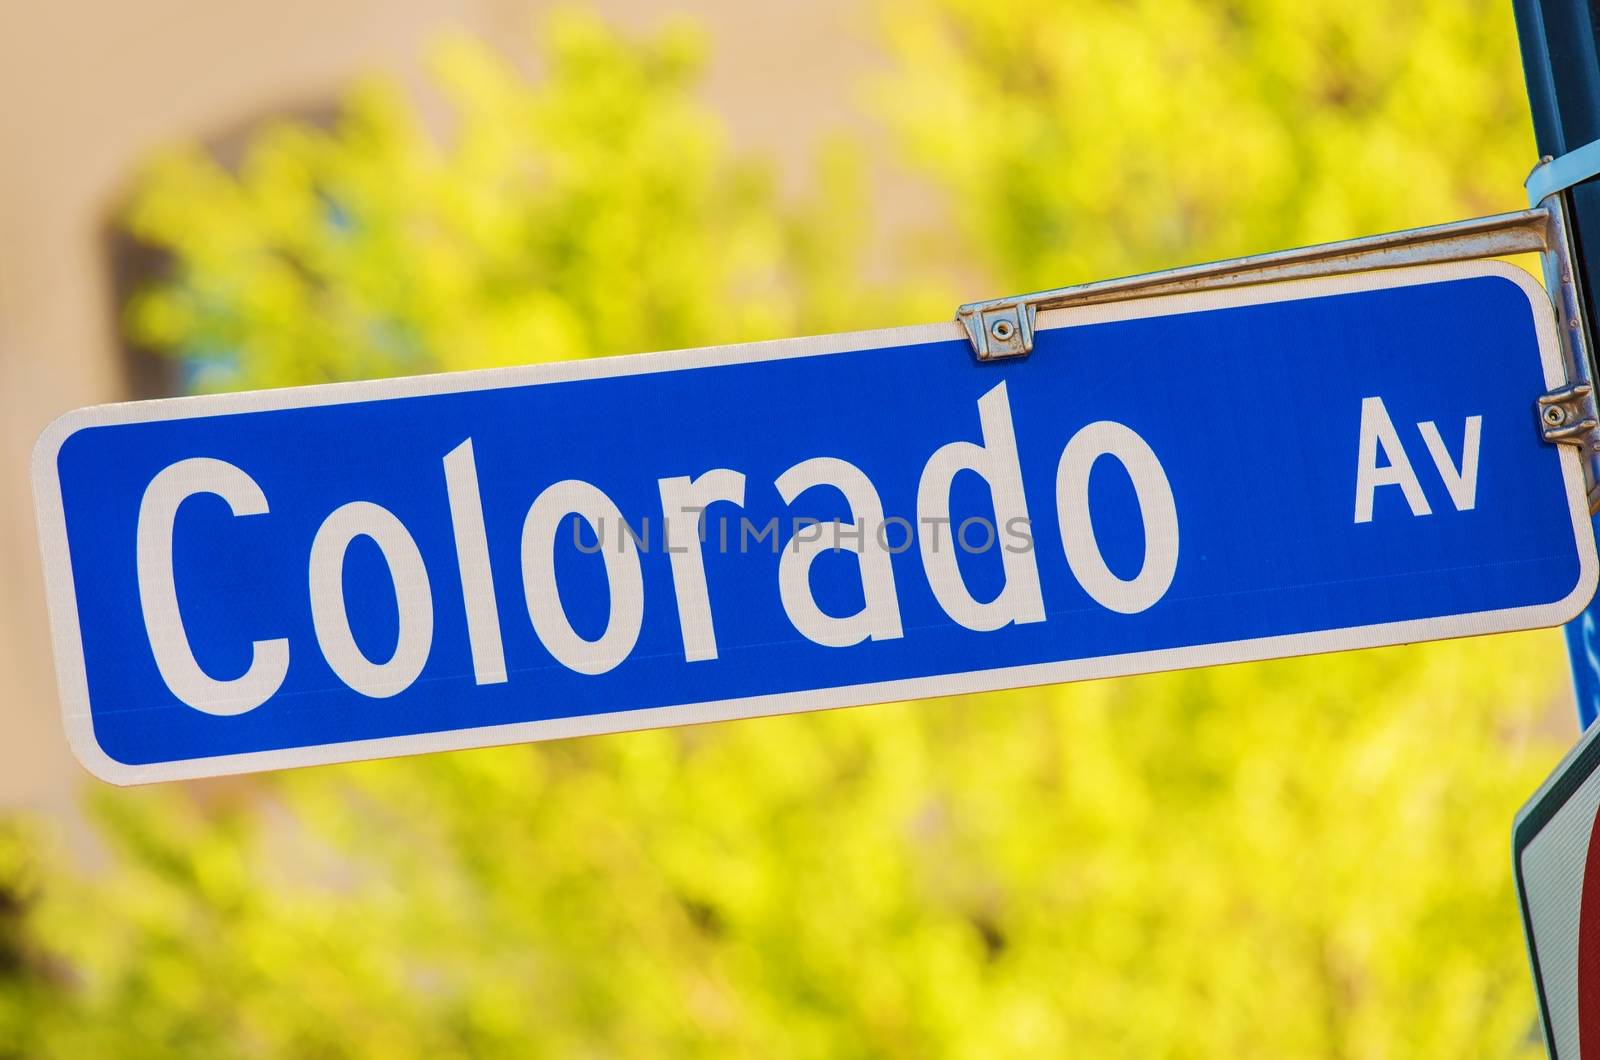 Colorado Avenue Street Sign on a Pole. Colorado Concept.